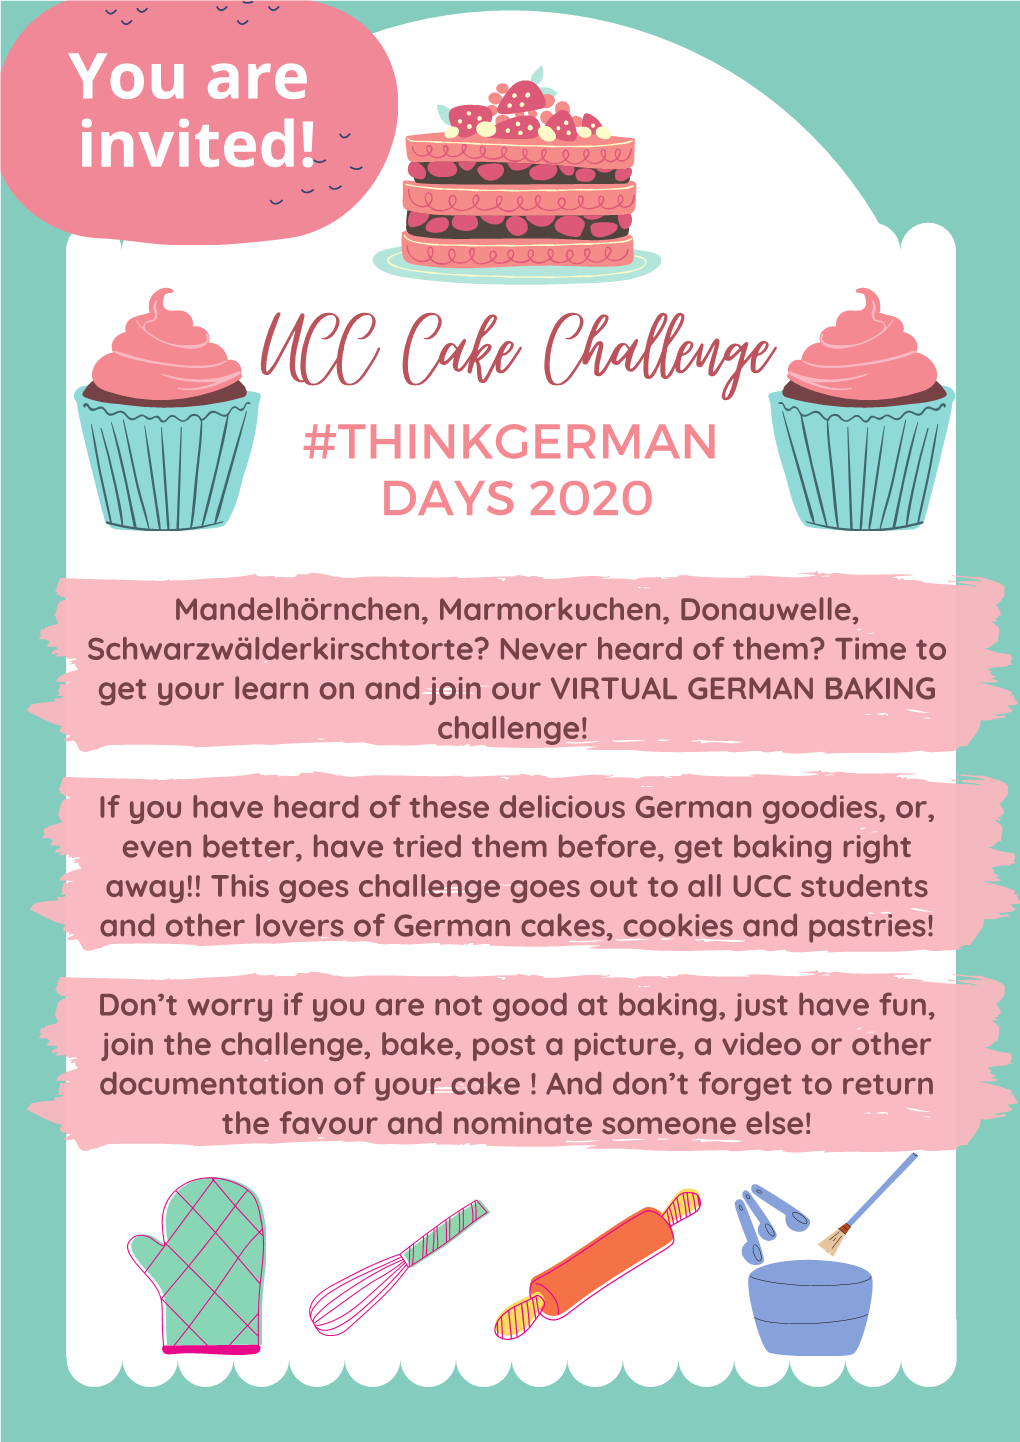 UCC Cake Challenge #THINKGERMAN DAYS 2020